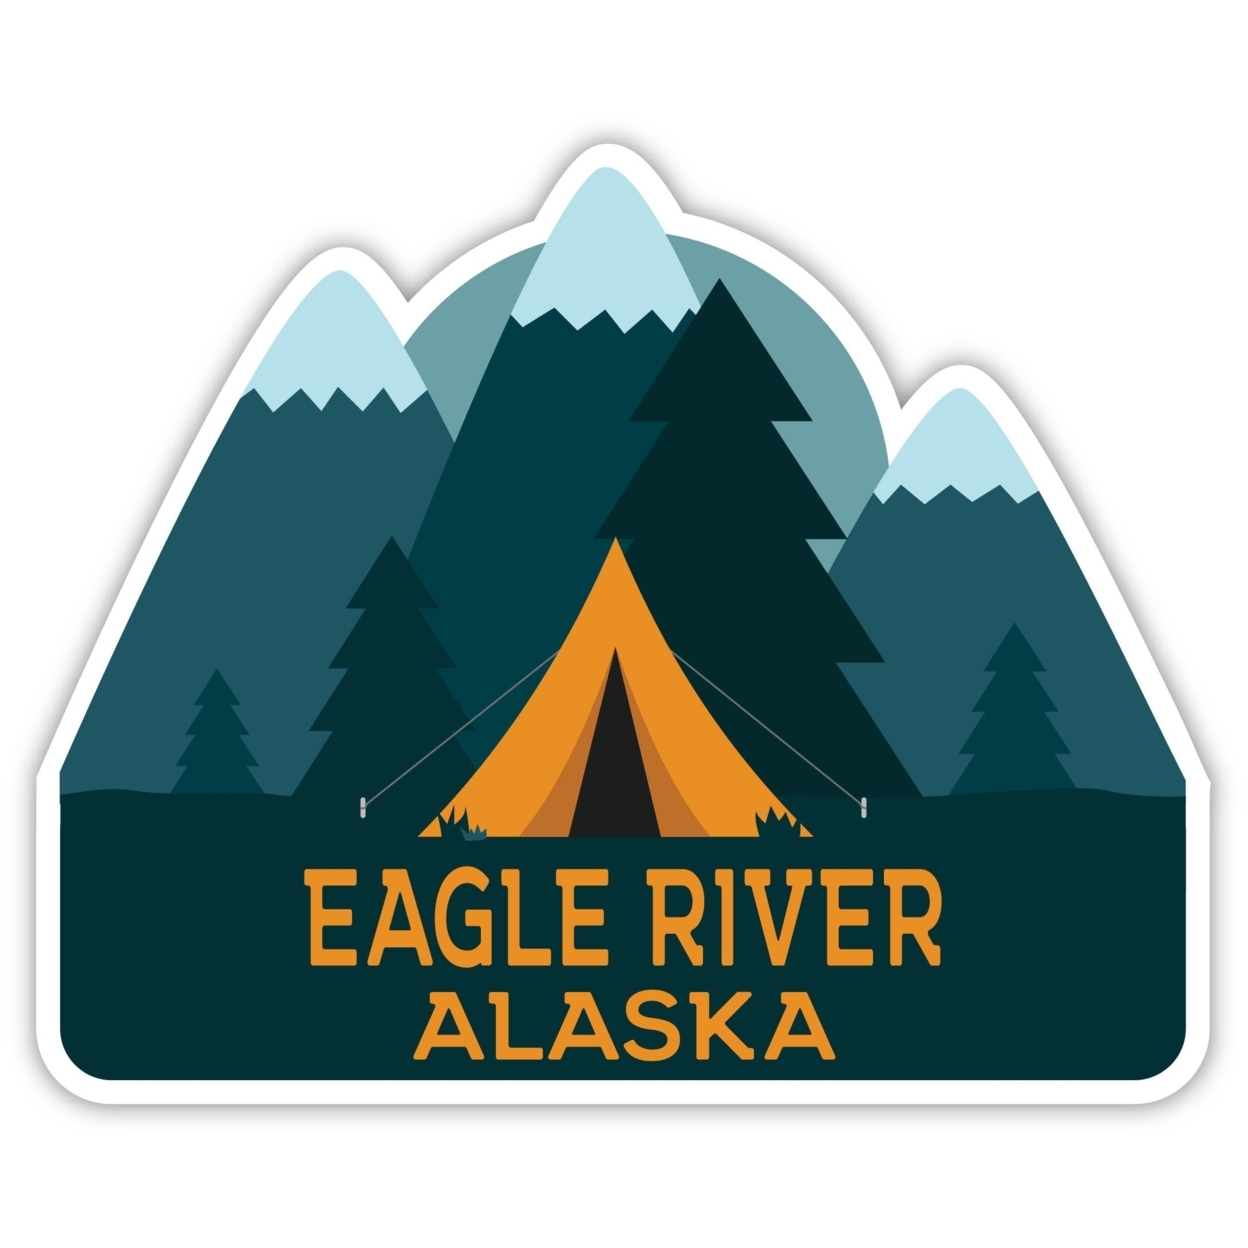 Eagle River Alaska Souvenir Decorative Stickers (Choose Theme And Size) - 4-Pack, 4-Inch, Tent